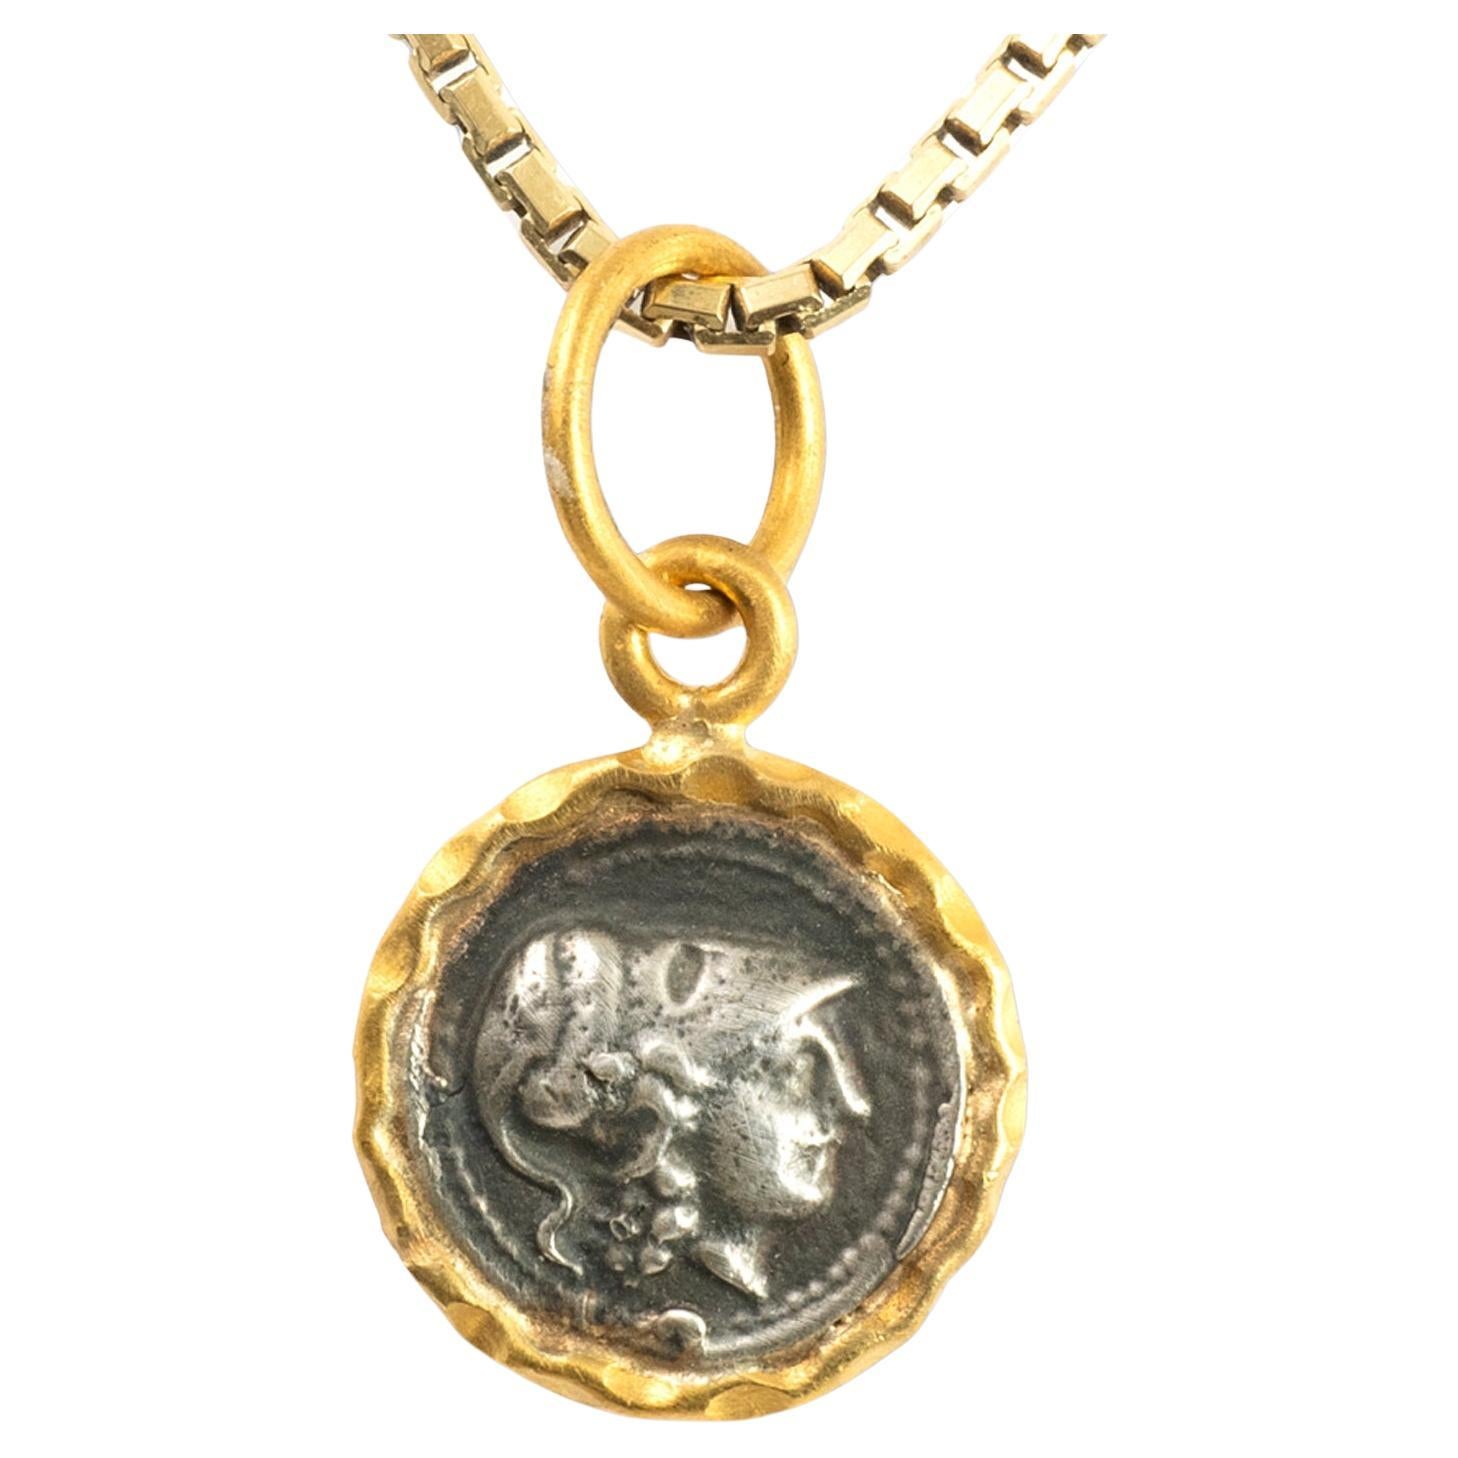 Ancient Athena, Wisdom Goddess, Coin (Replica) Charm Pendant, 24kt Gold & Silver